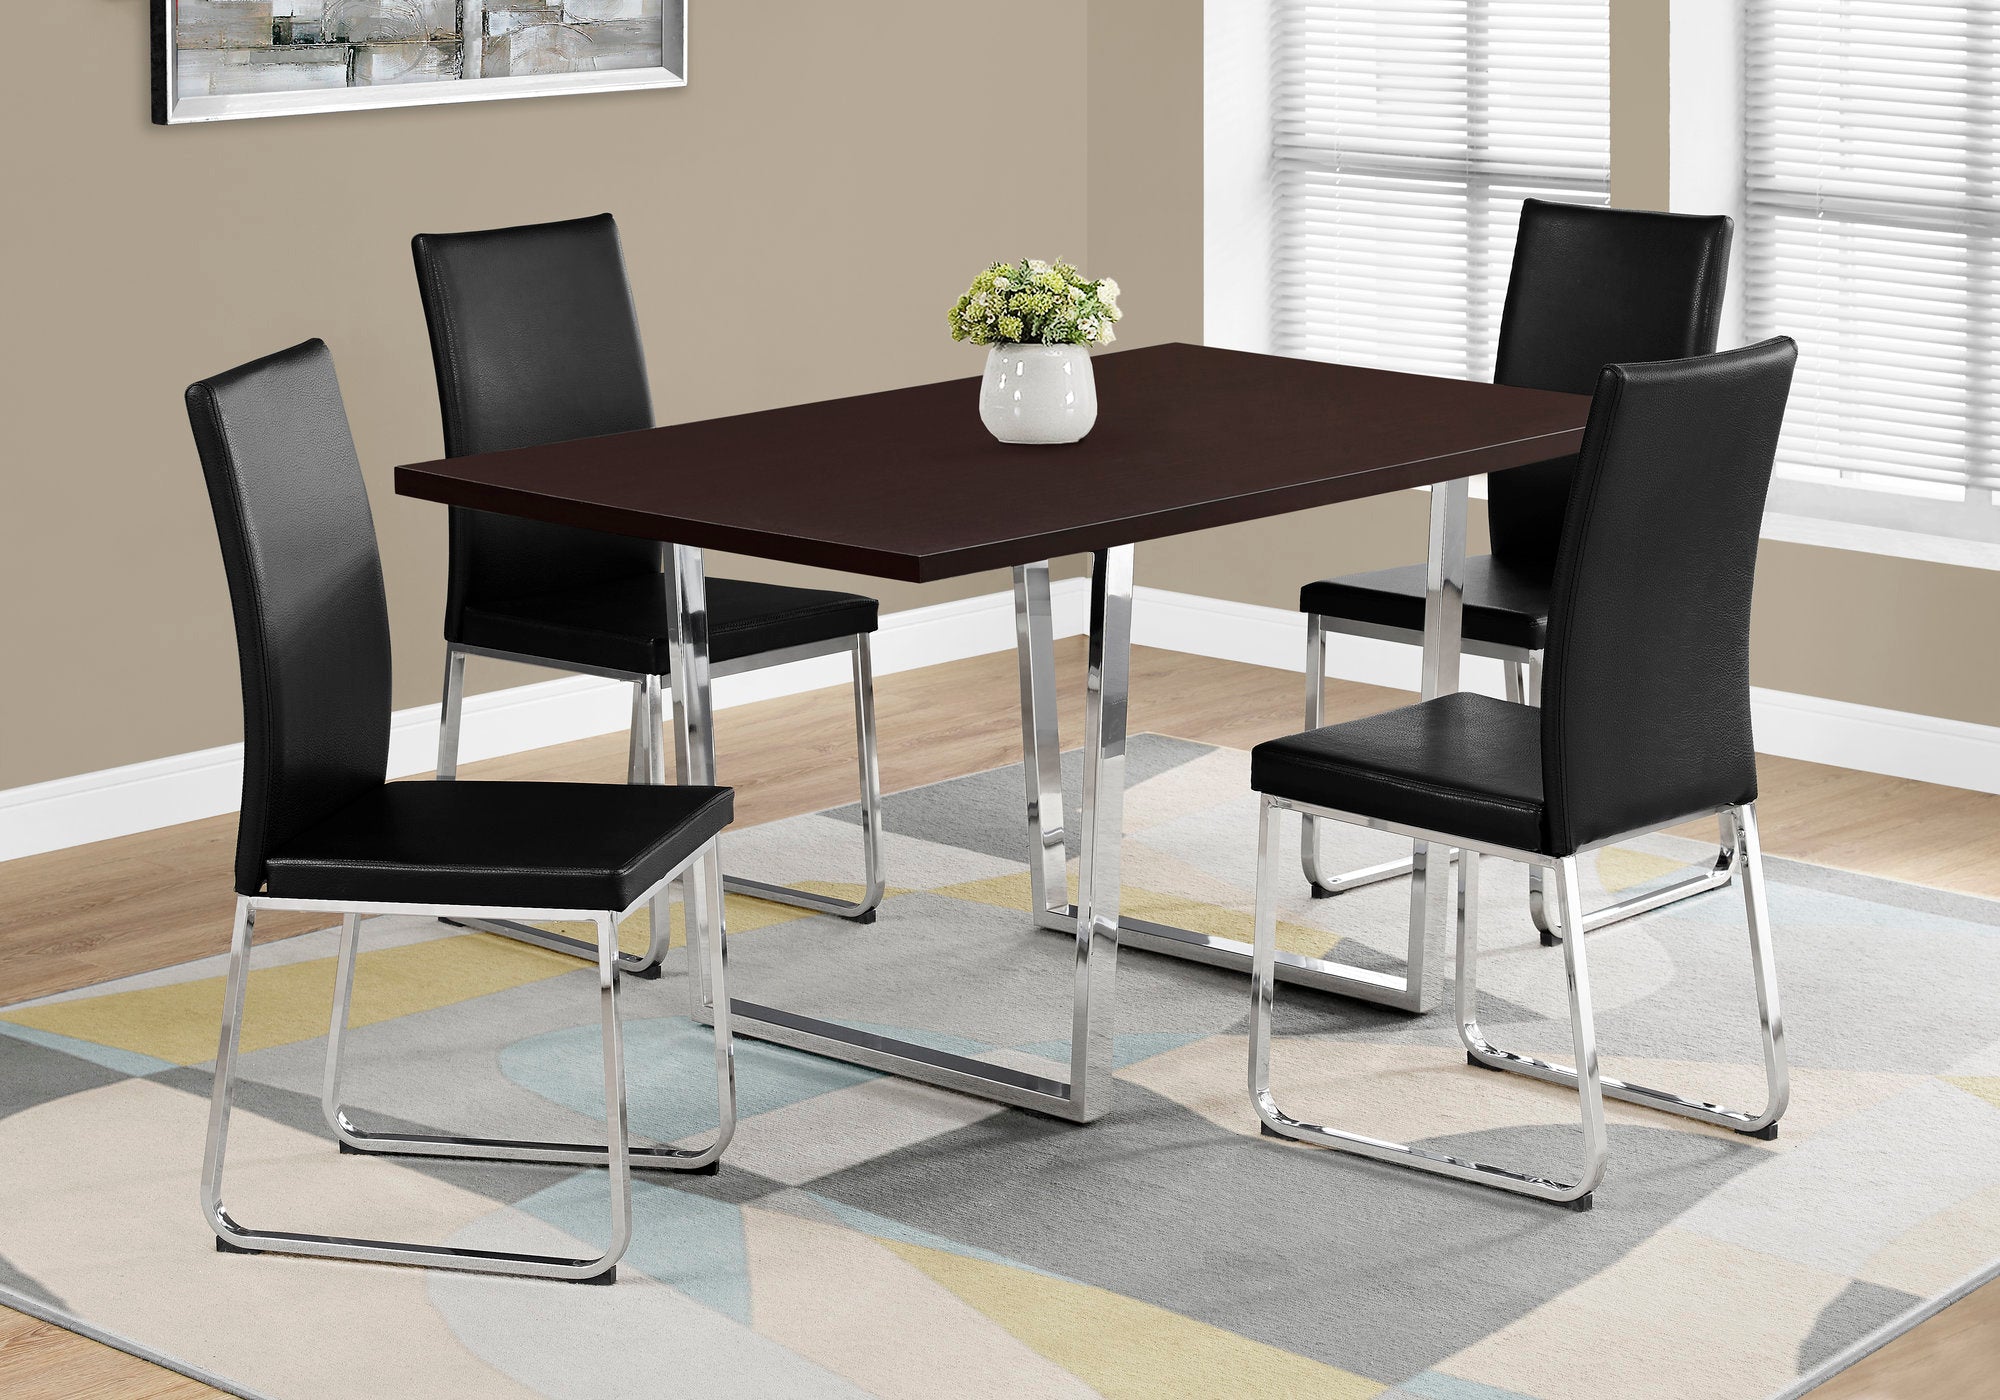 MN-621122    Dining Table, 60" Rectangular, Metal, Kitchen, Dining Room, Metal Legs, Laminate, Dark Brown, Chrome, Contemporary, Modern